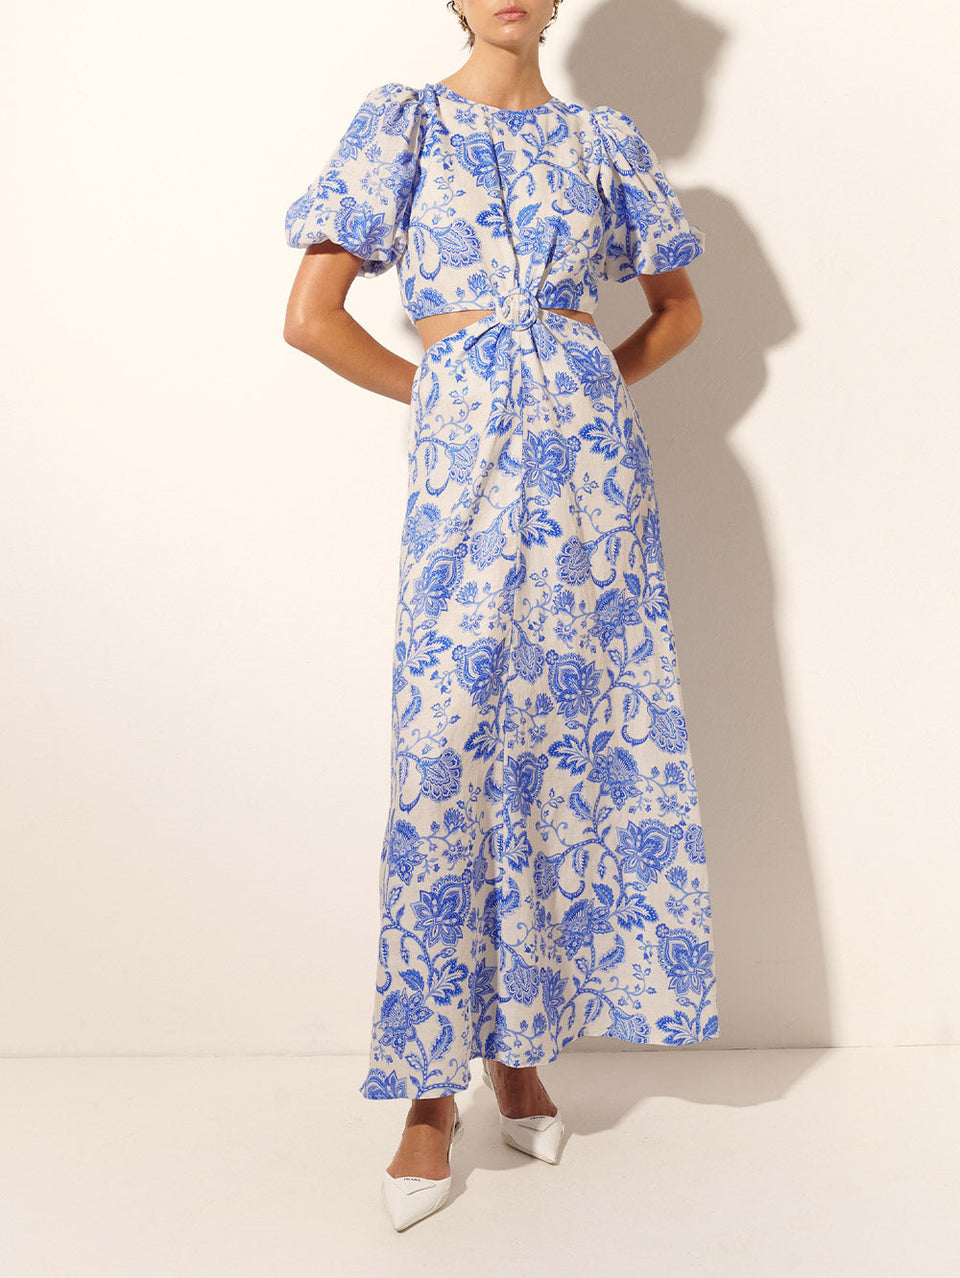 Athena Maxi Dress KIVARI | Model wears blue and white paisley maxi dress